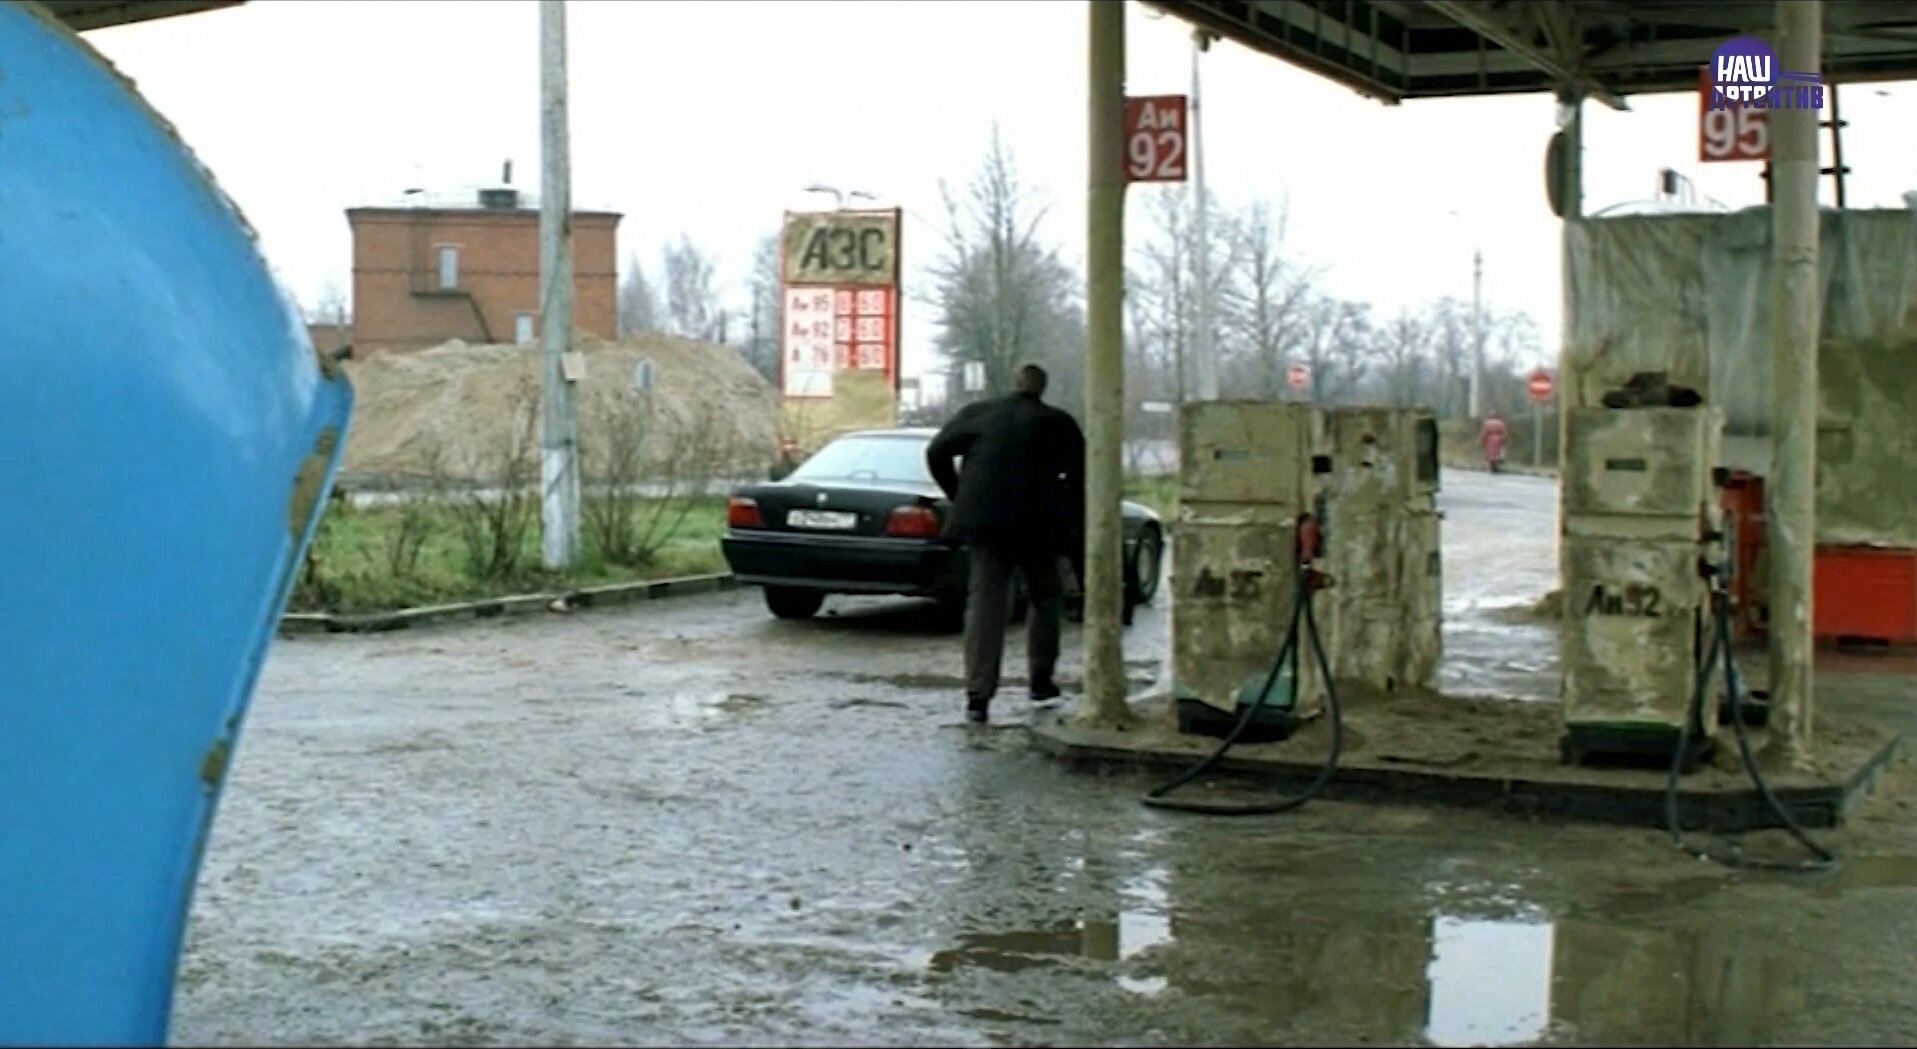 Заправка из фильма «Бумер», на которой герои меняли магнитолу на бензин: как она выглядит сегодня (10 фото)